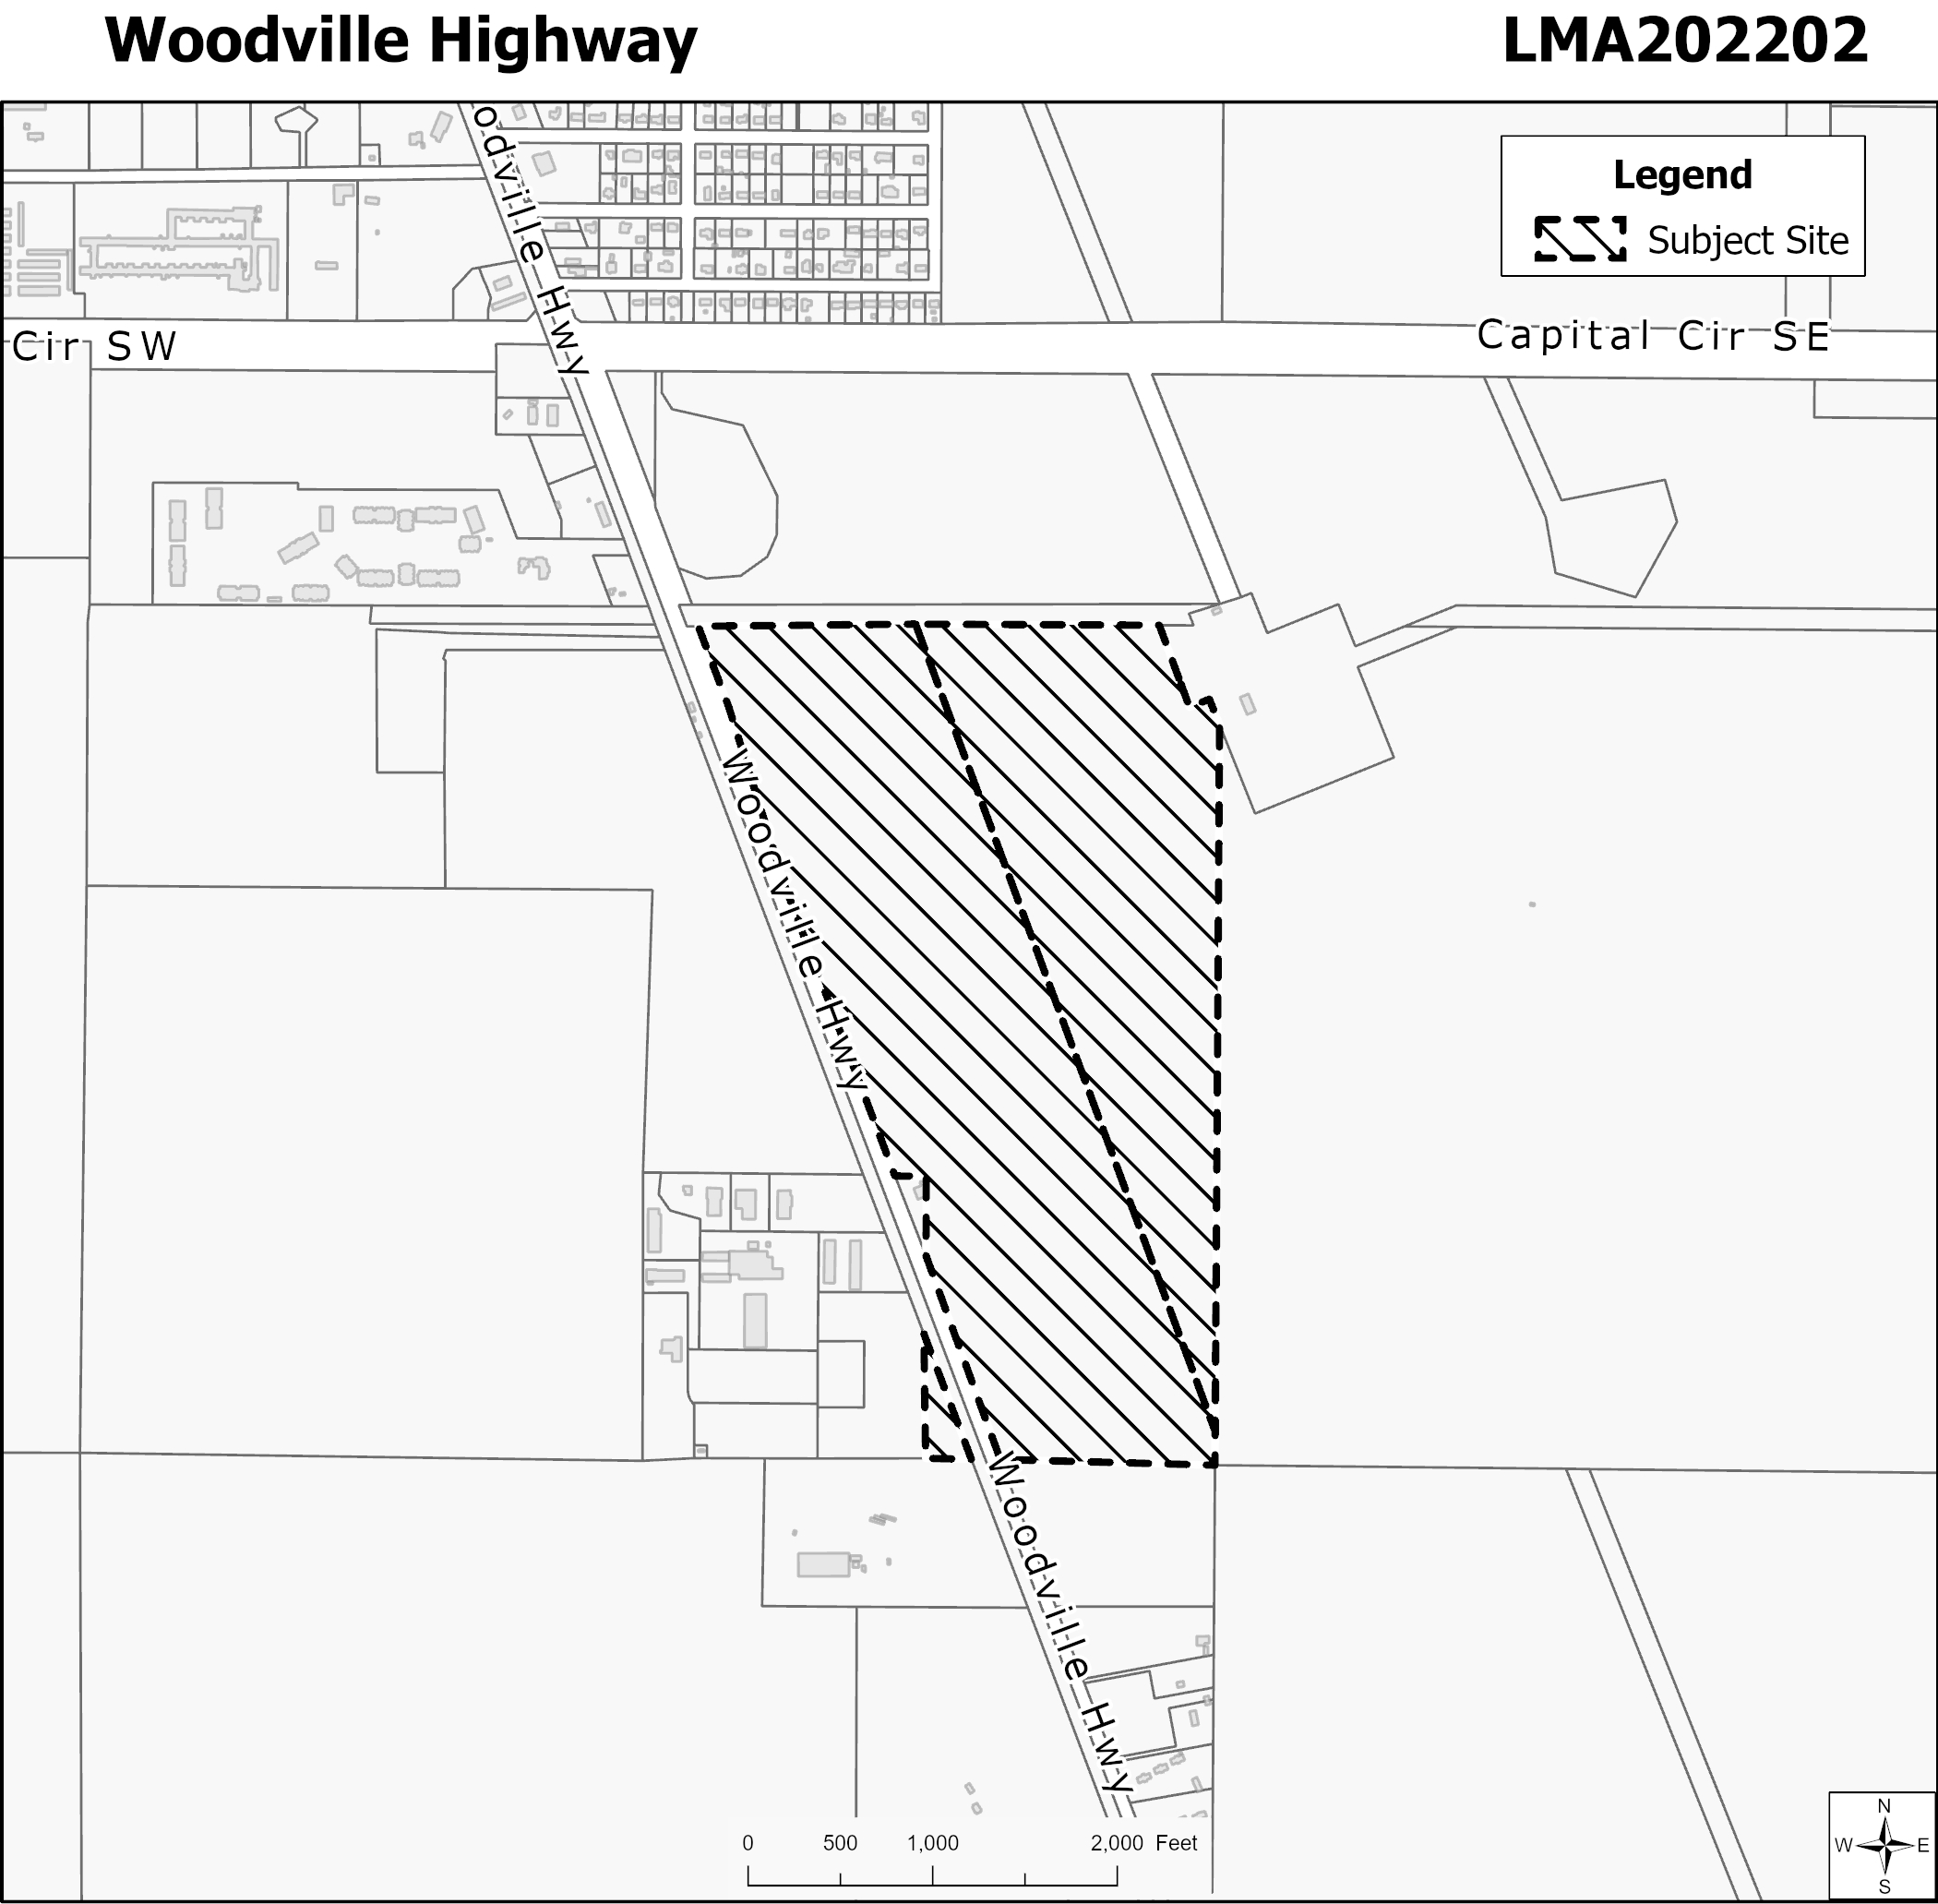 Woodville Highway (LMA202202)